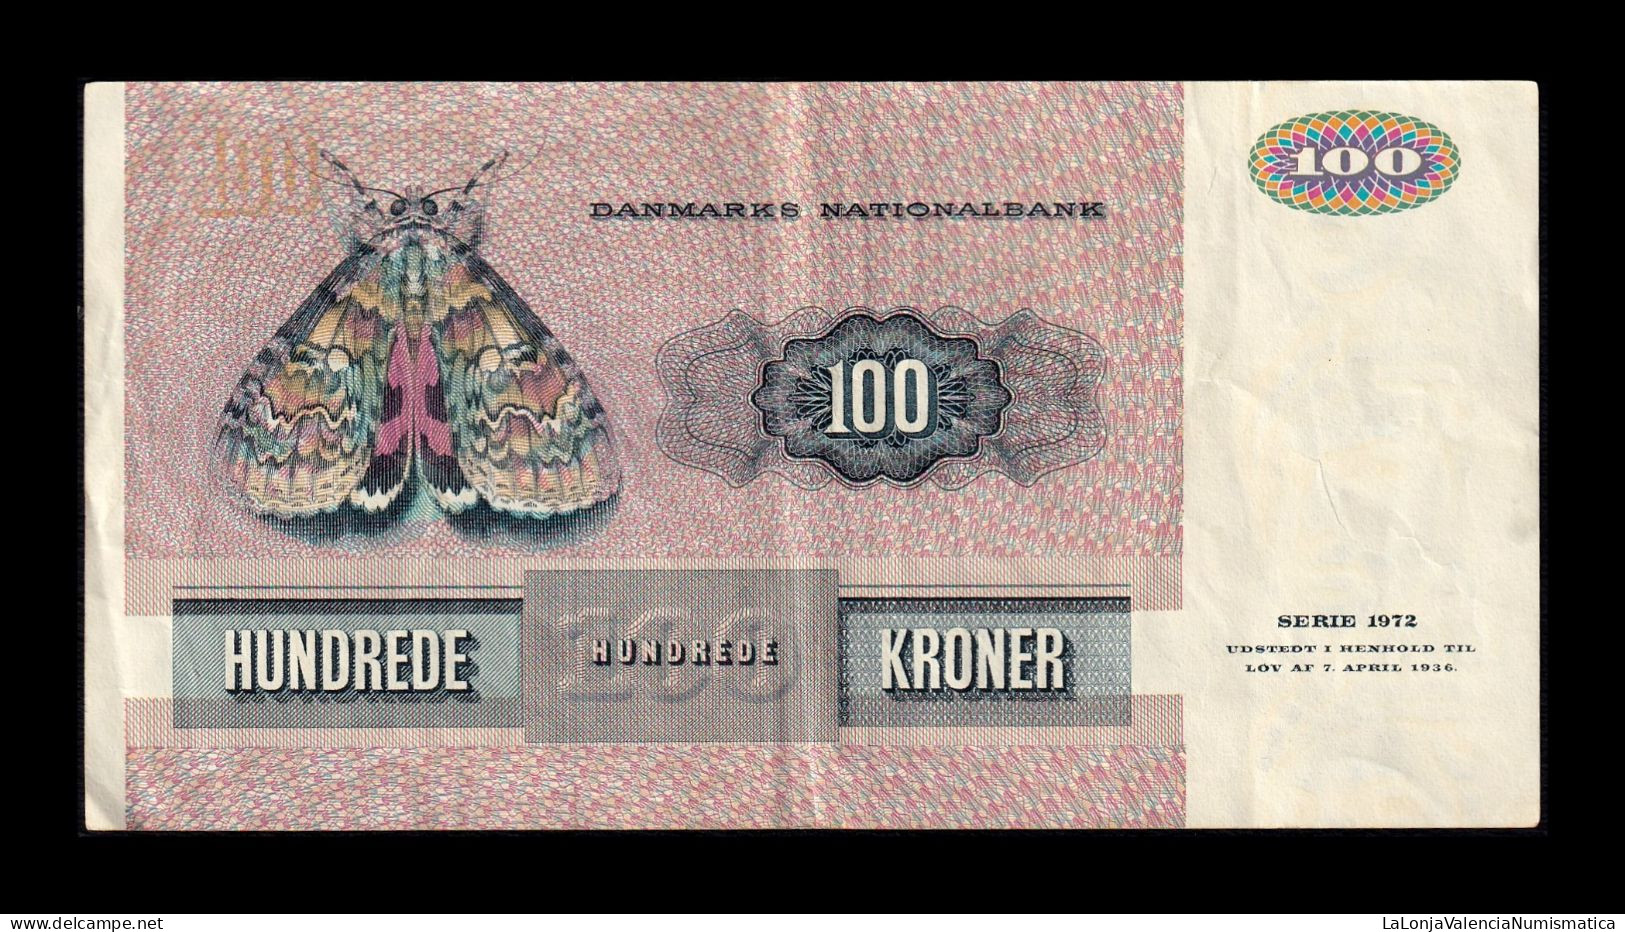 Dinamarca Denmark 100 Kroner 1990 Pick 51t Mbc Vf - Denemarken